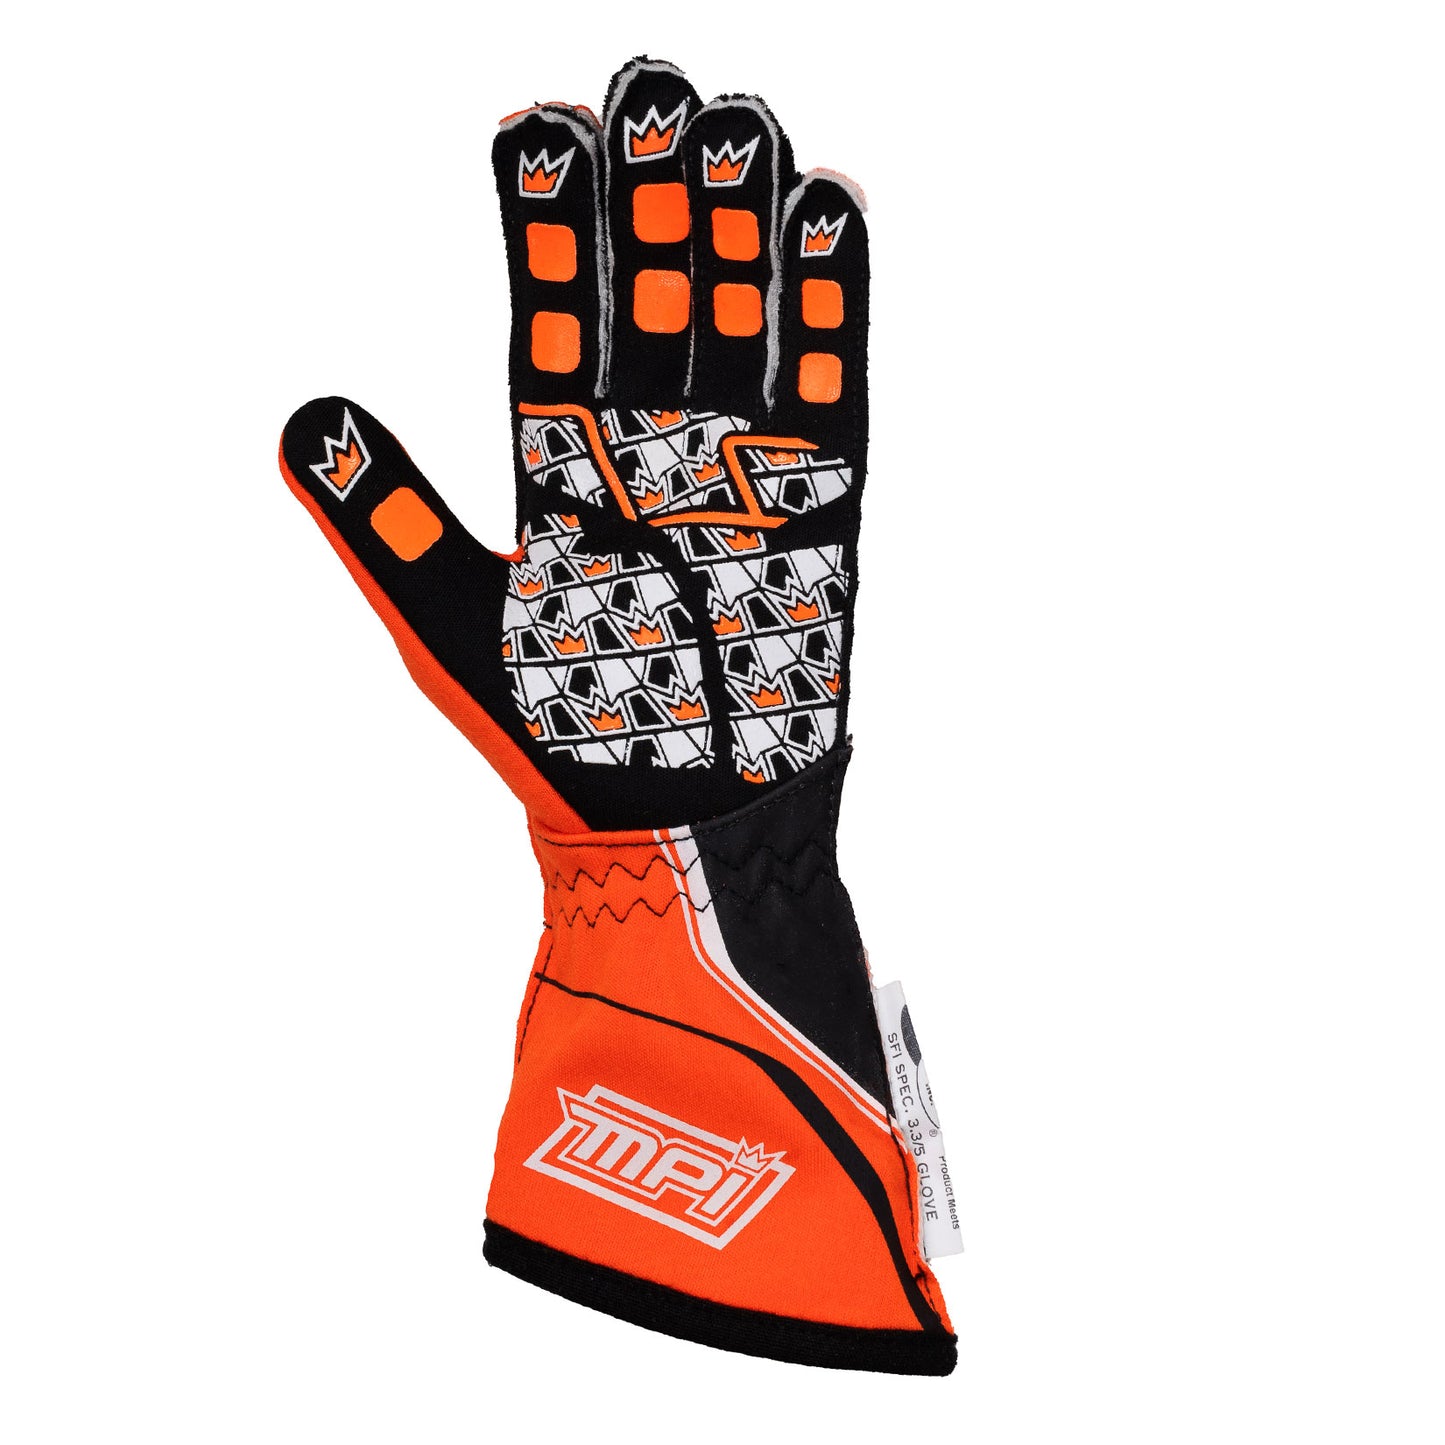 MPI Racing Gloves SFI 3.3/5 Orange Large